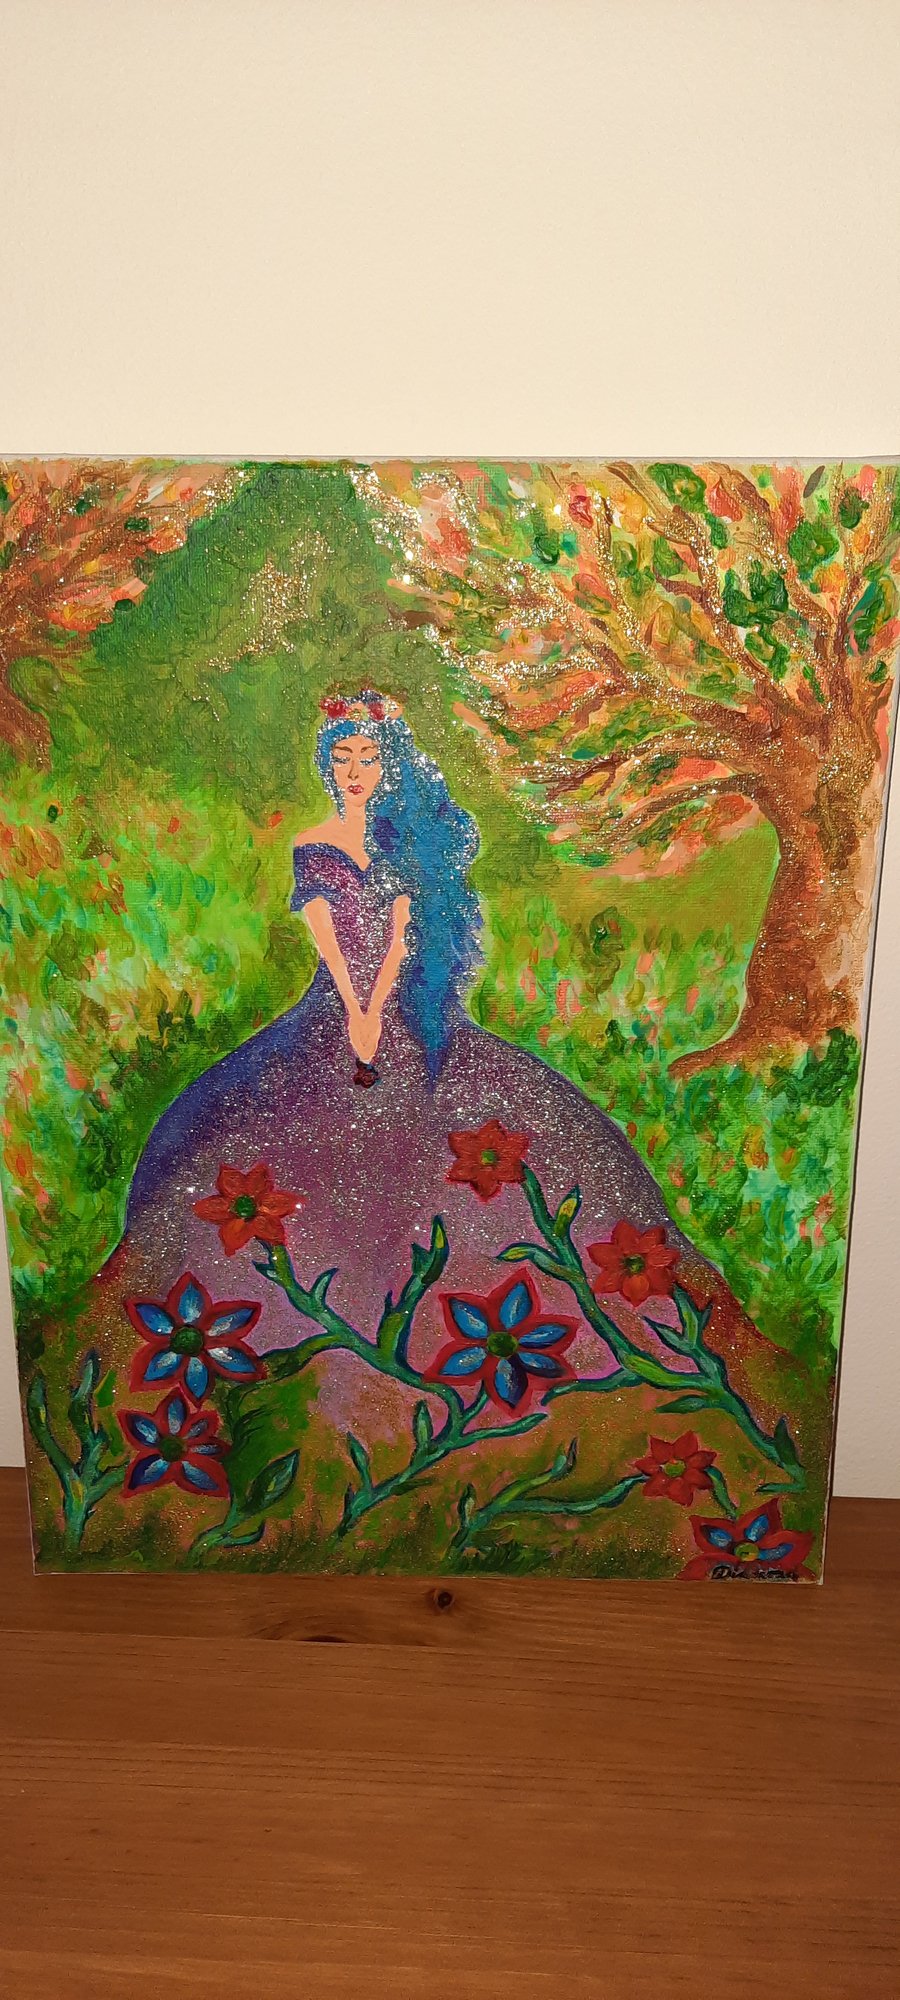 Original acrylic painting on canvas board